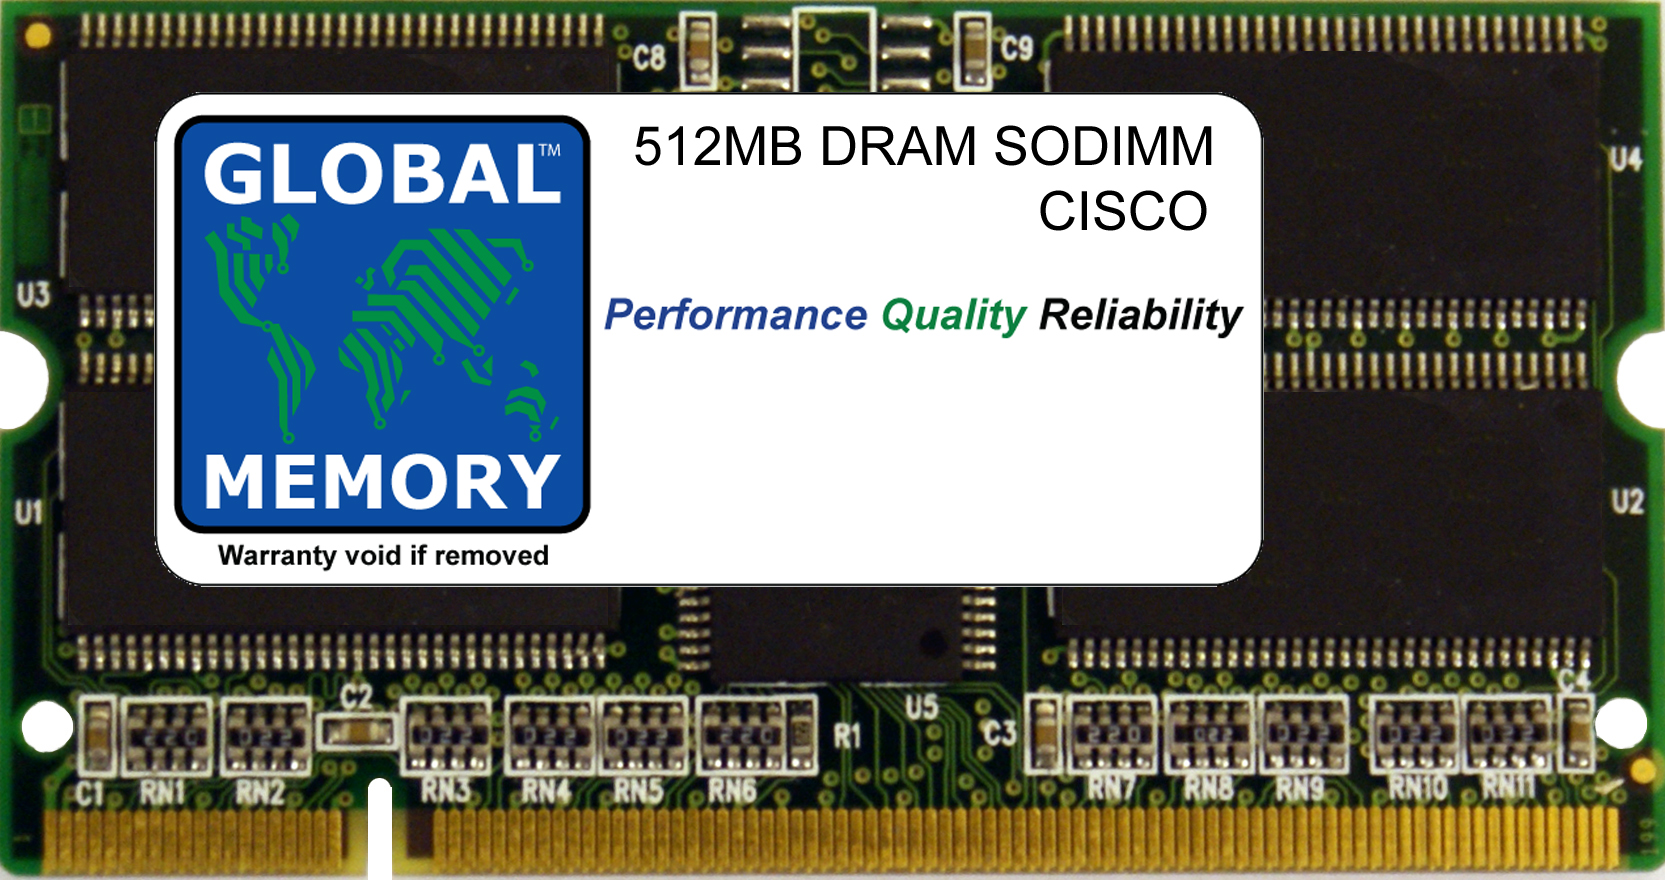 512MB DRAM SODIMM RAM FOR CISCO CATALYST 6500 SERIES SWITCHES & 7600 SERIES ROUTERS FlexWAN MODULE (MEM-CC-WAN-512M)